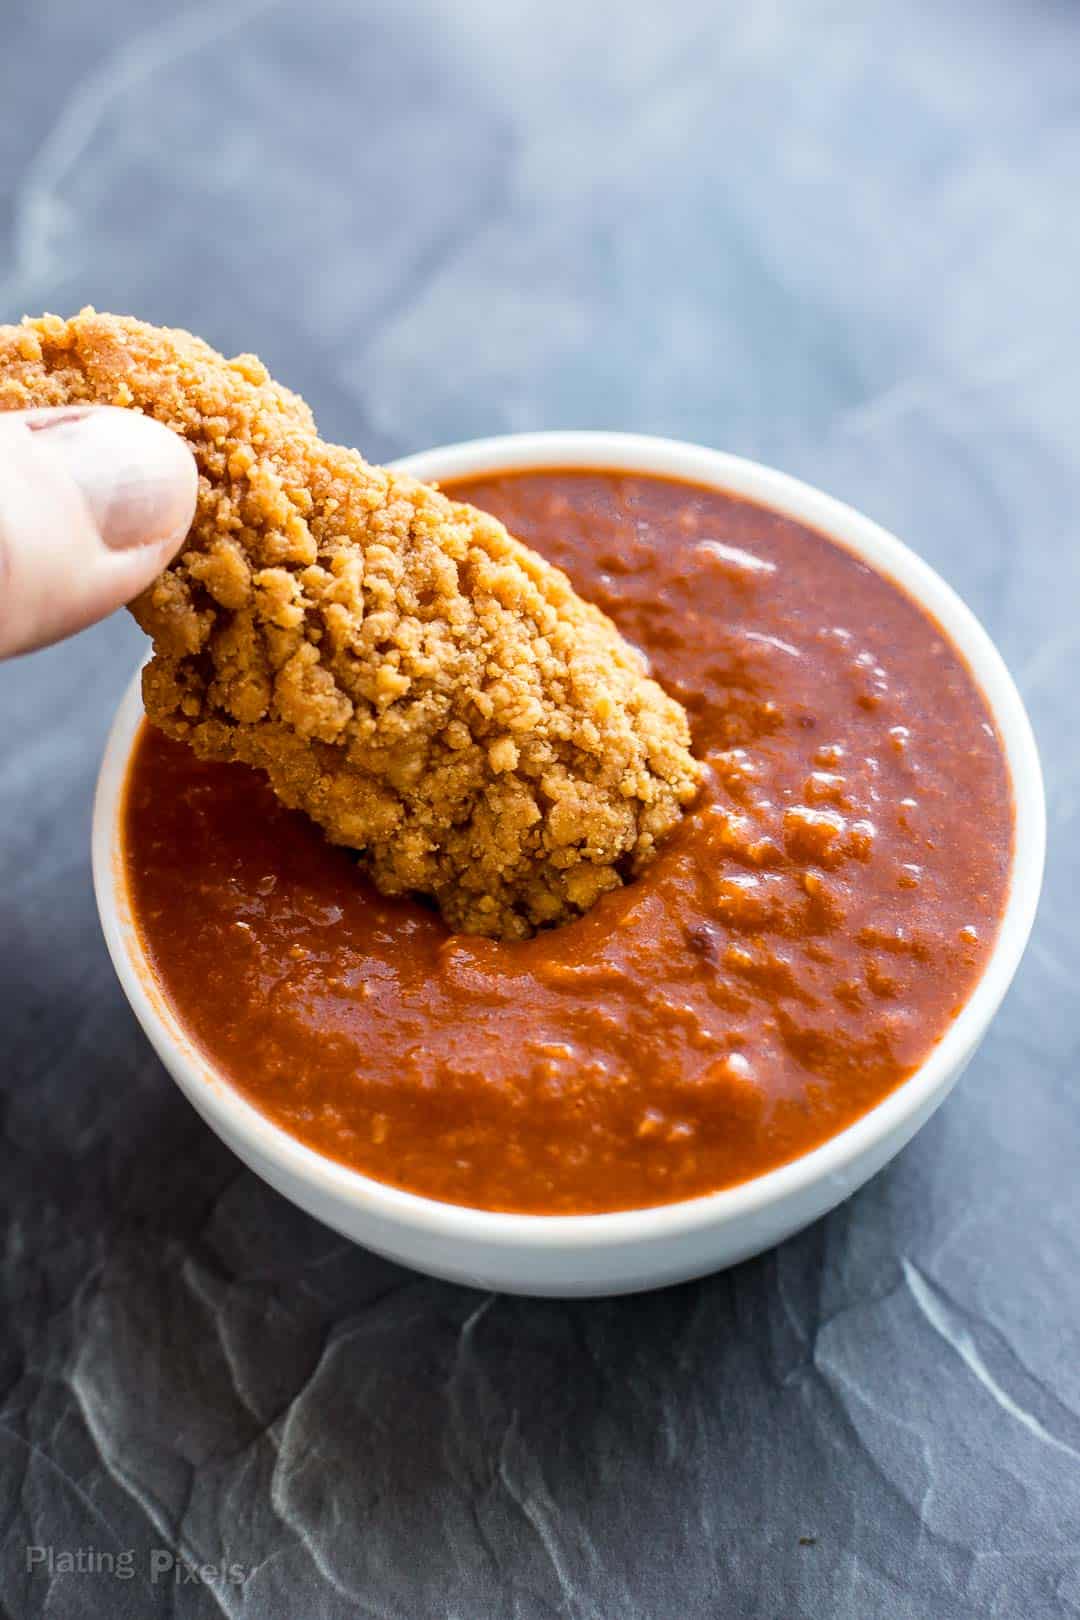 Dipping a crispy chicken strip into homemade barbecue sauce